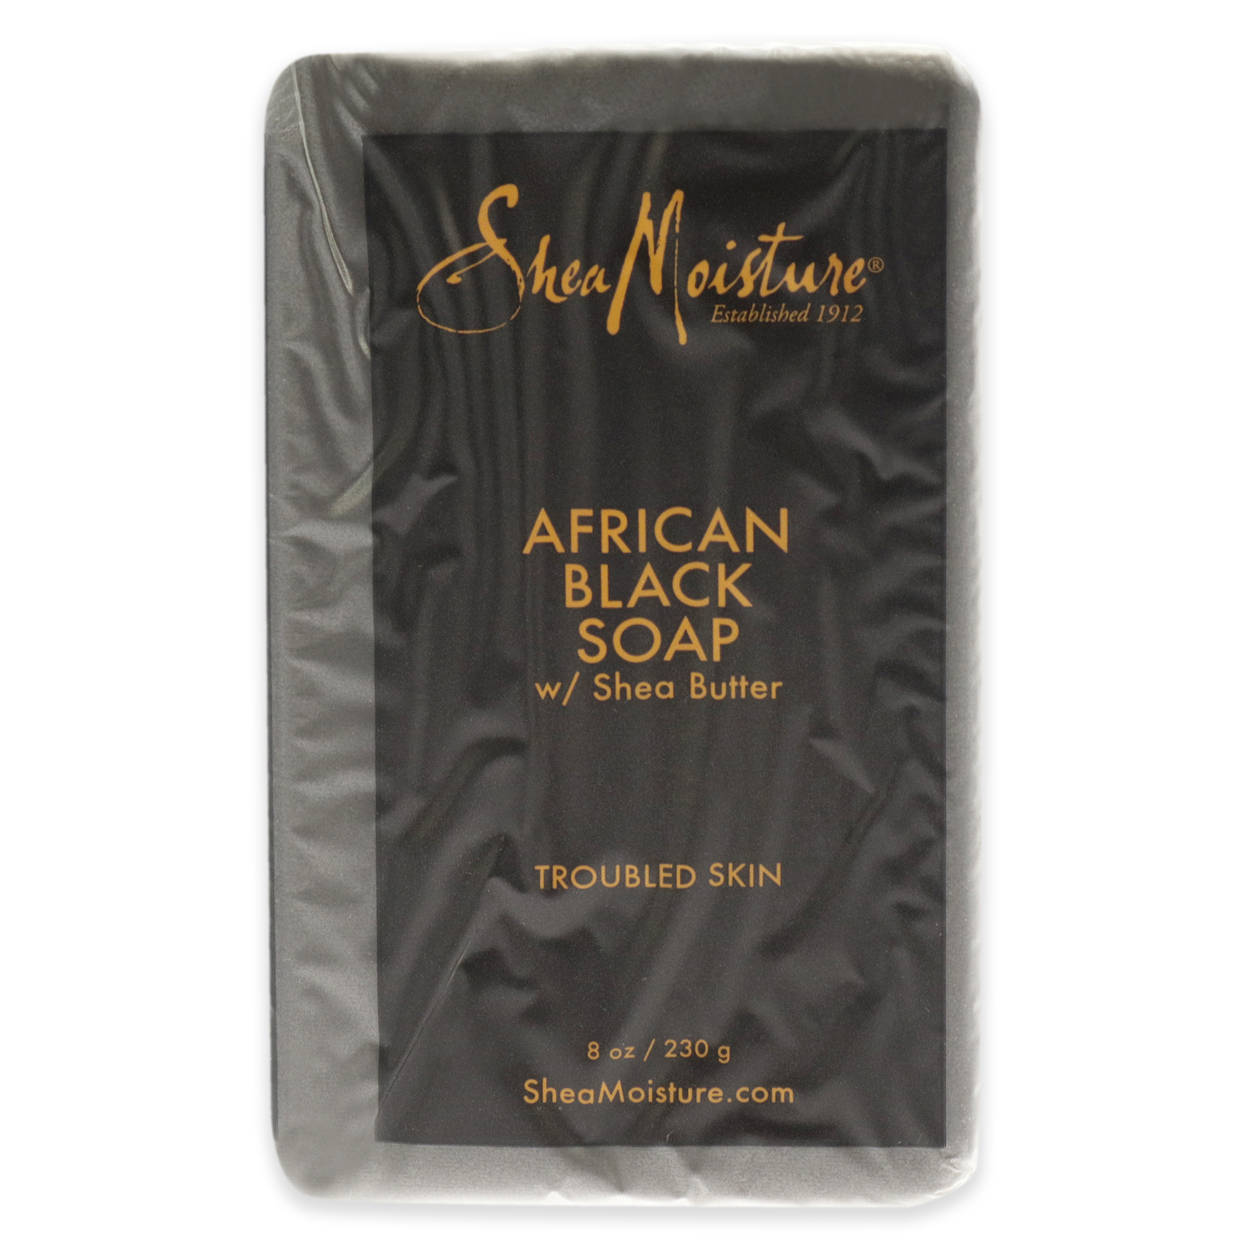 Shea Moisture African Black Soap Troubled Skin Bar Soap 8 Oz